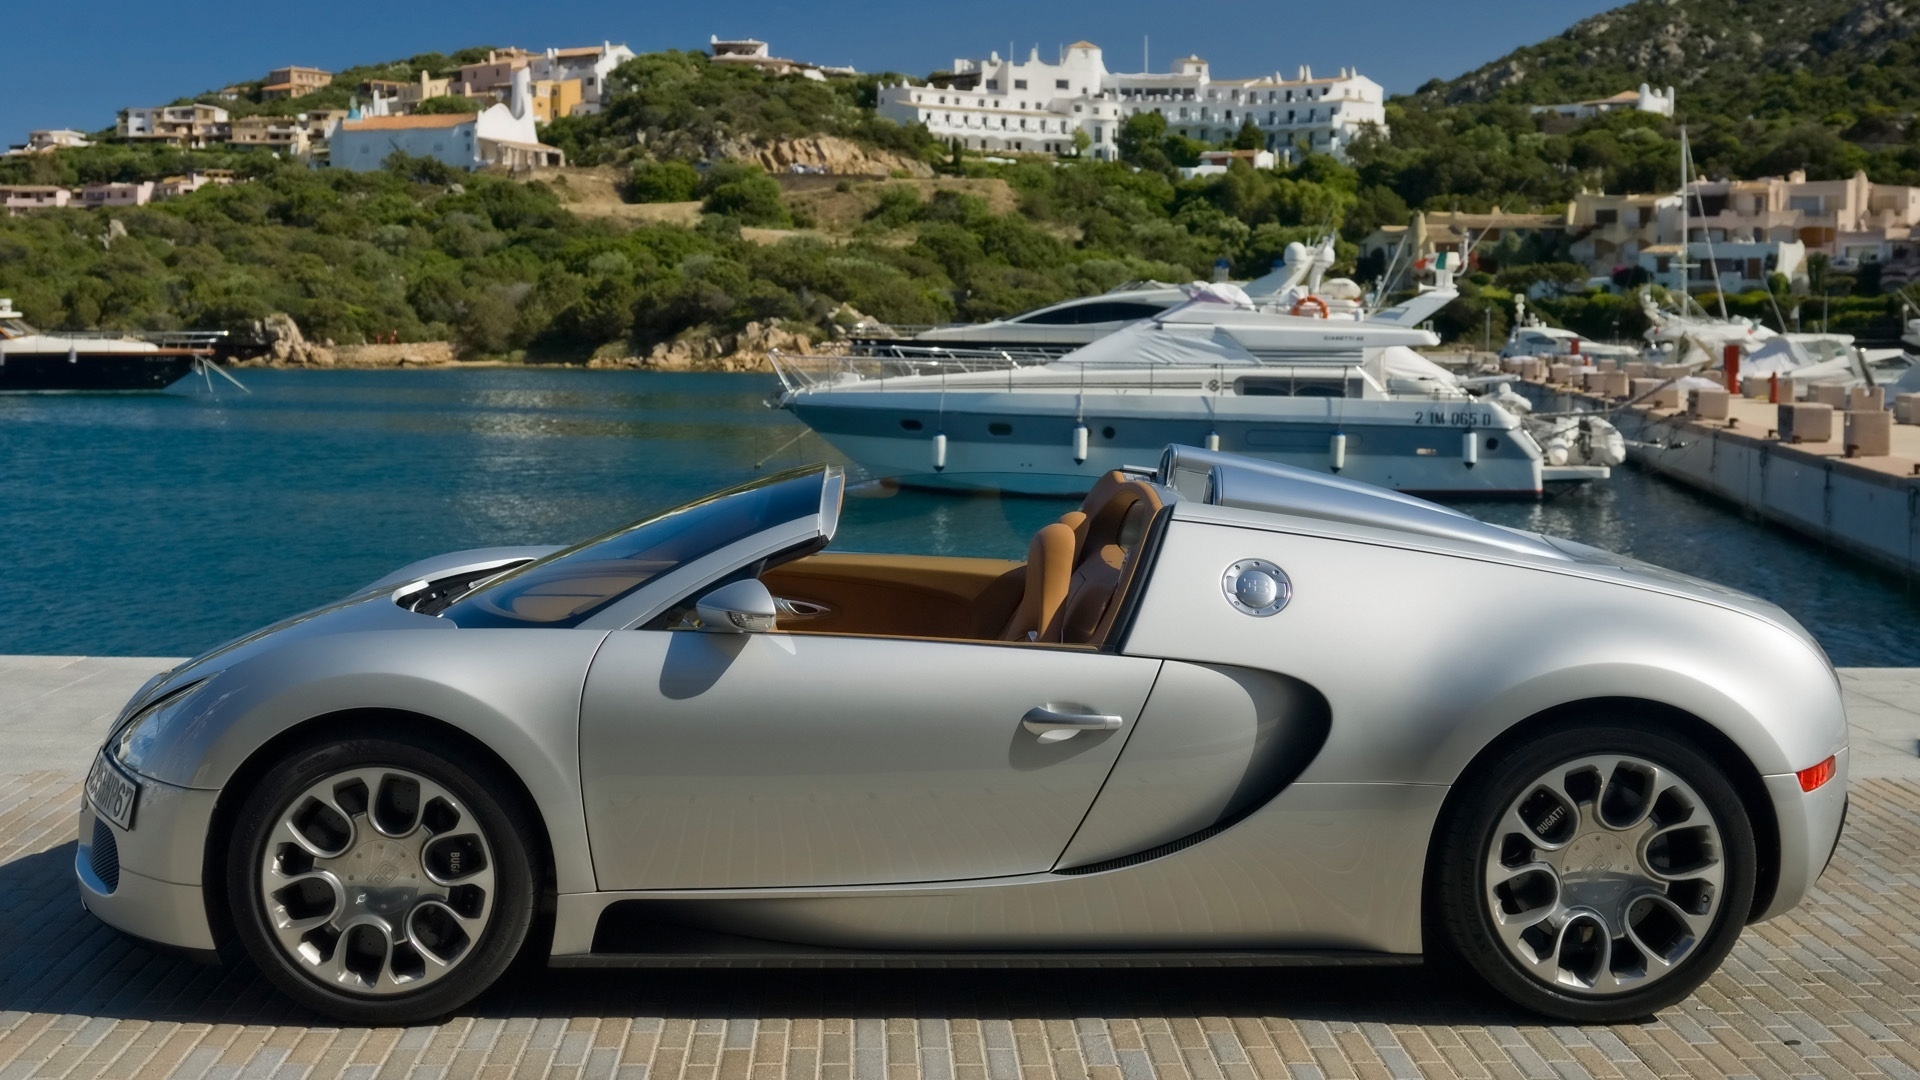 Bugatti Veyron 16.4 Grand Sport in Sardinia 2010 - Side for 1920 x 1080 HDTV 1080p resolution